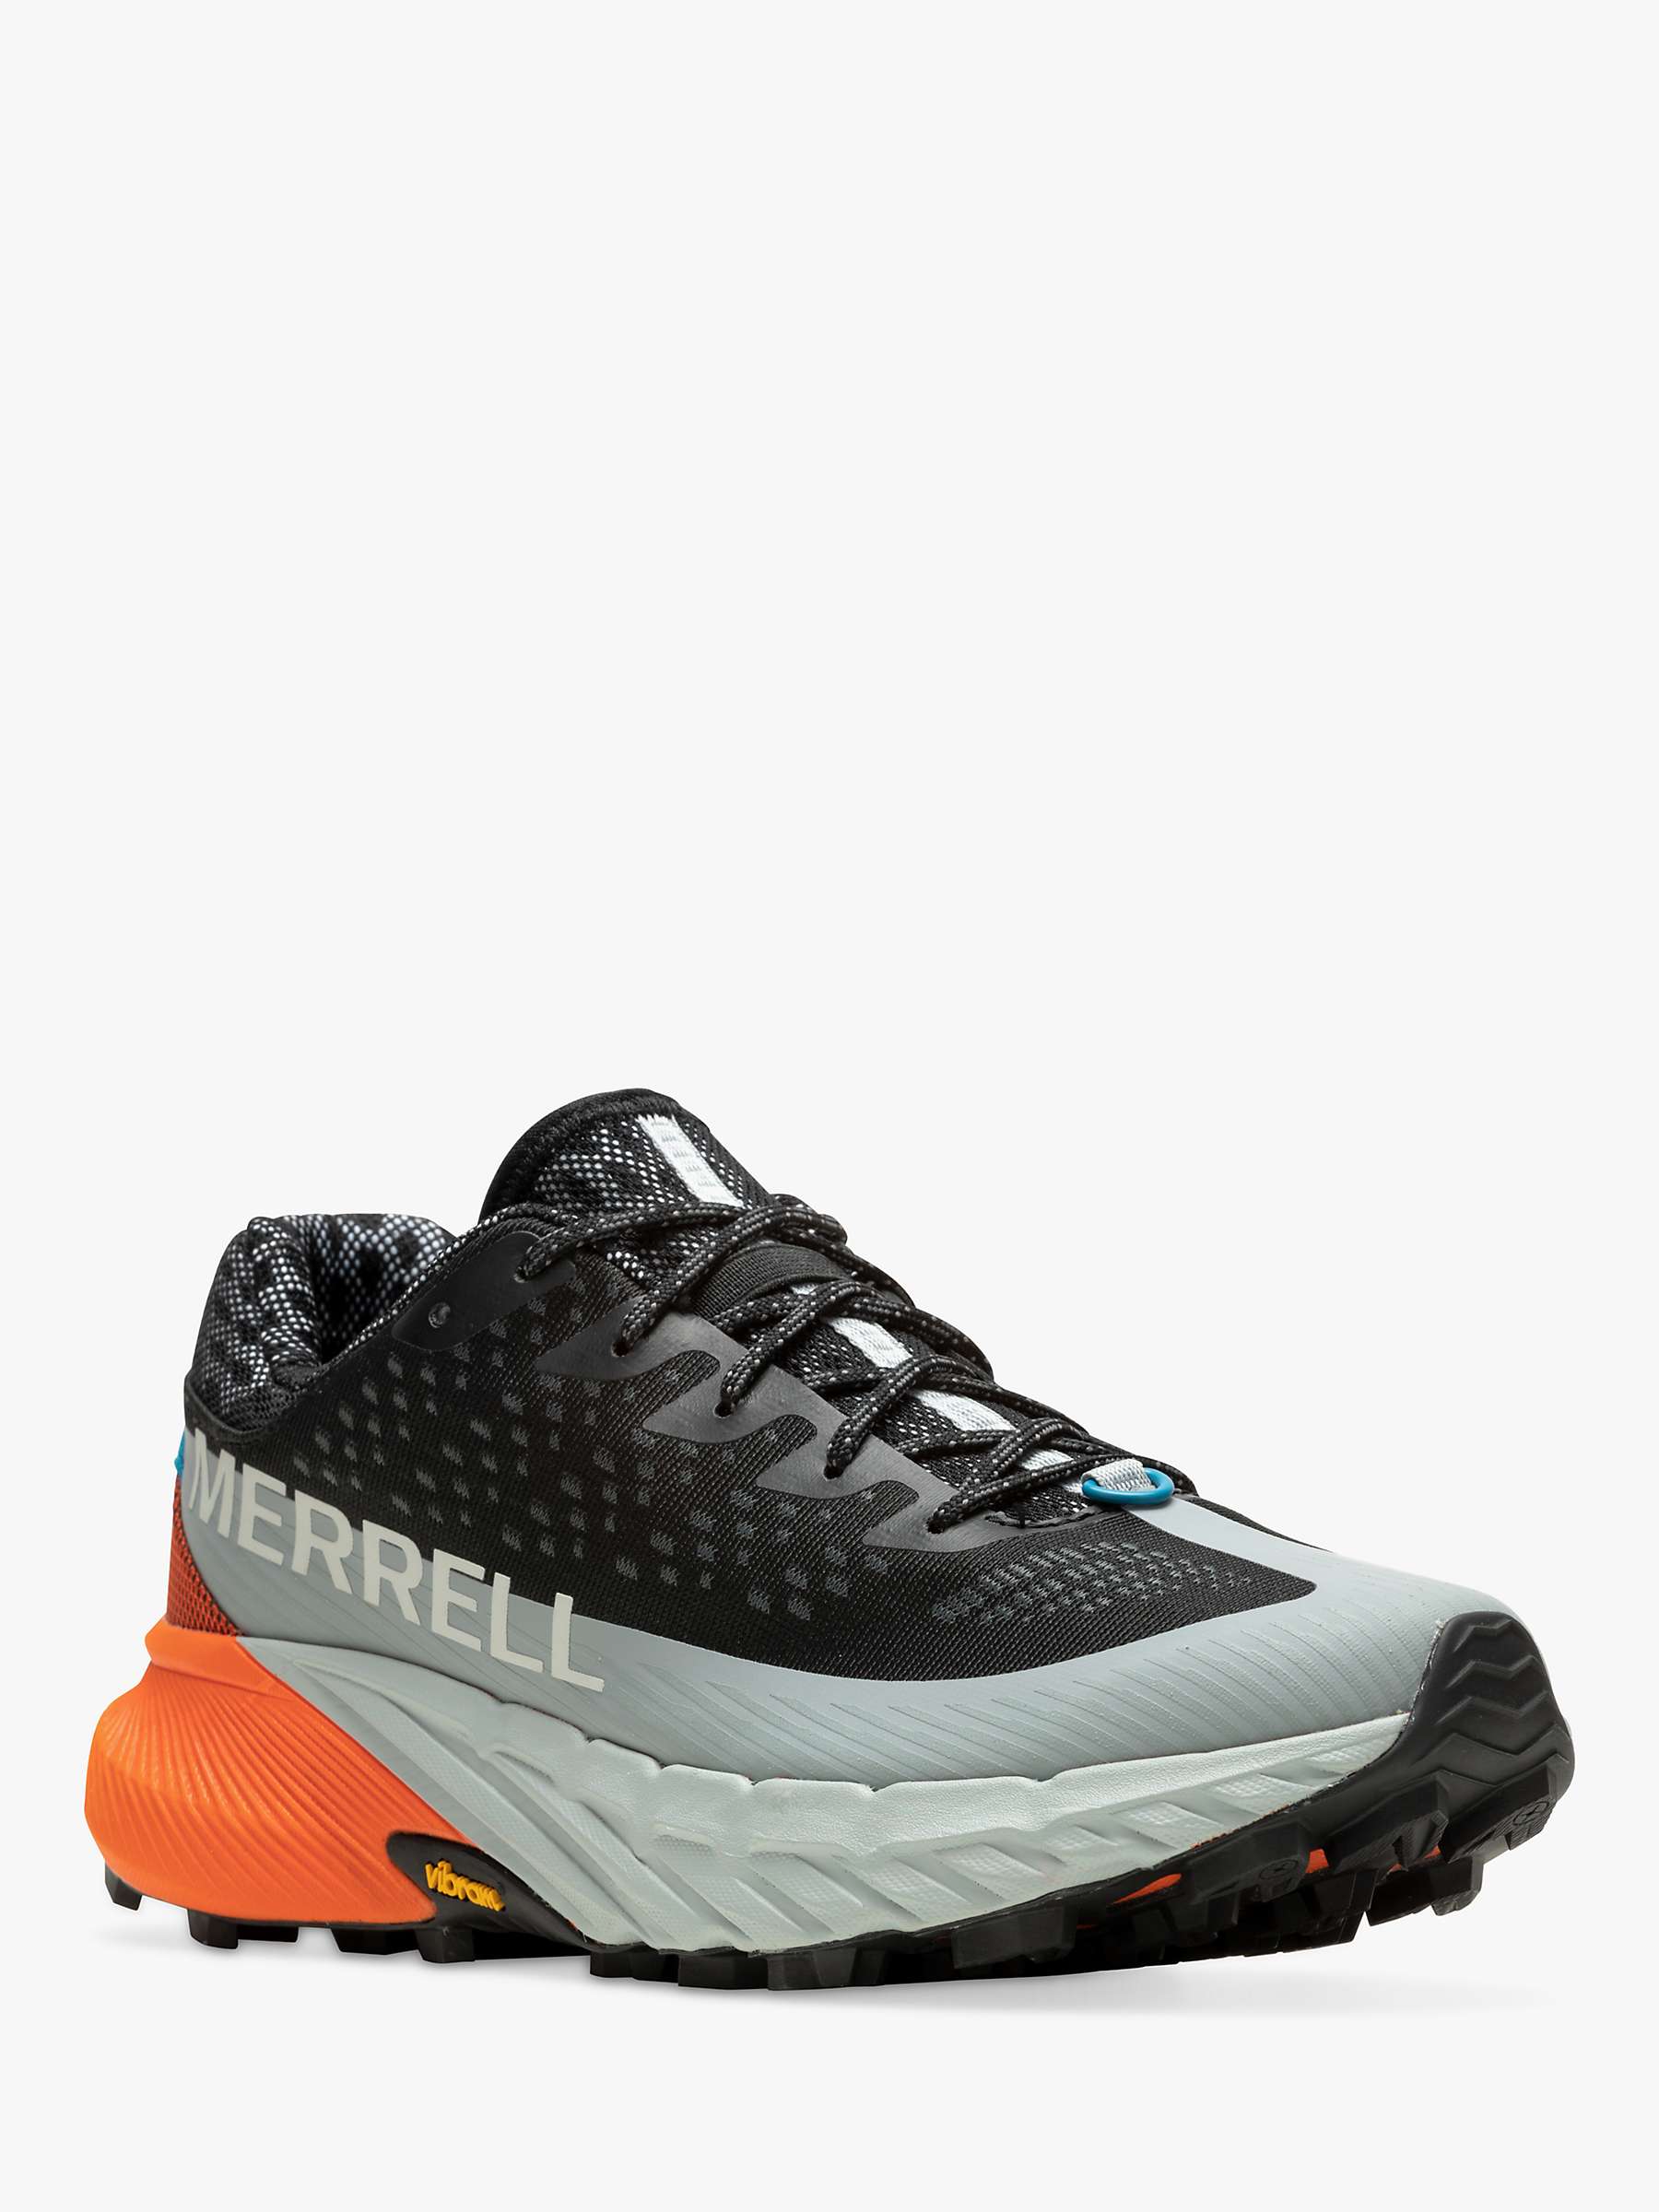 Buy Merrell Agility Peak 5 Men's Trail Running Shoes Online at johnlewis.com